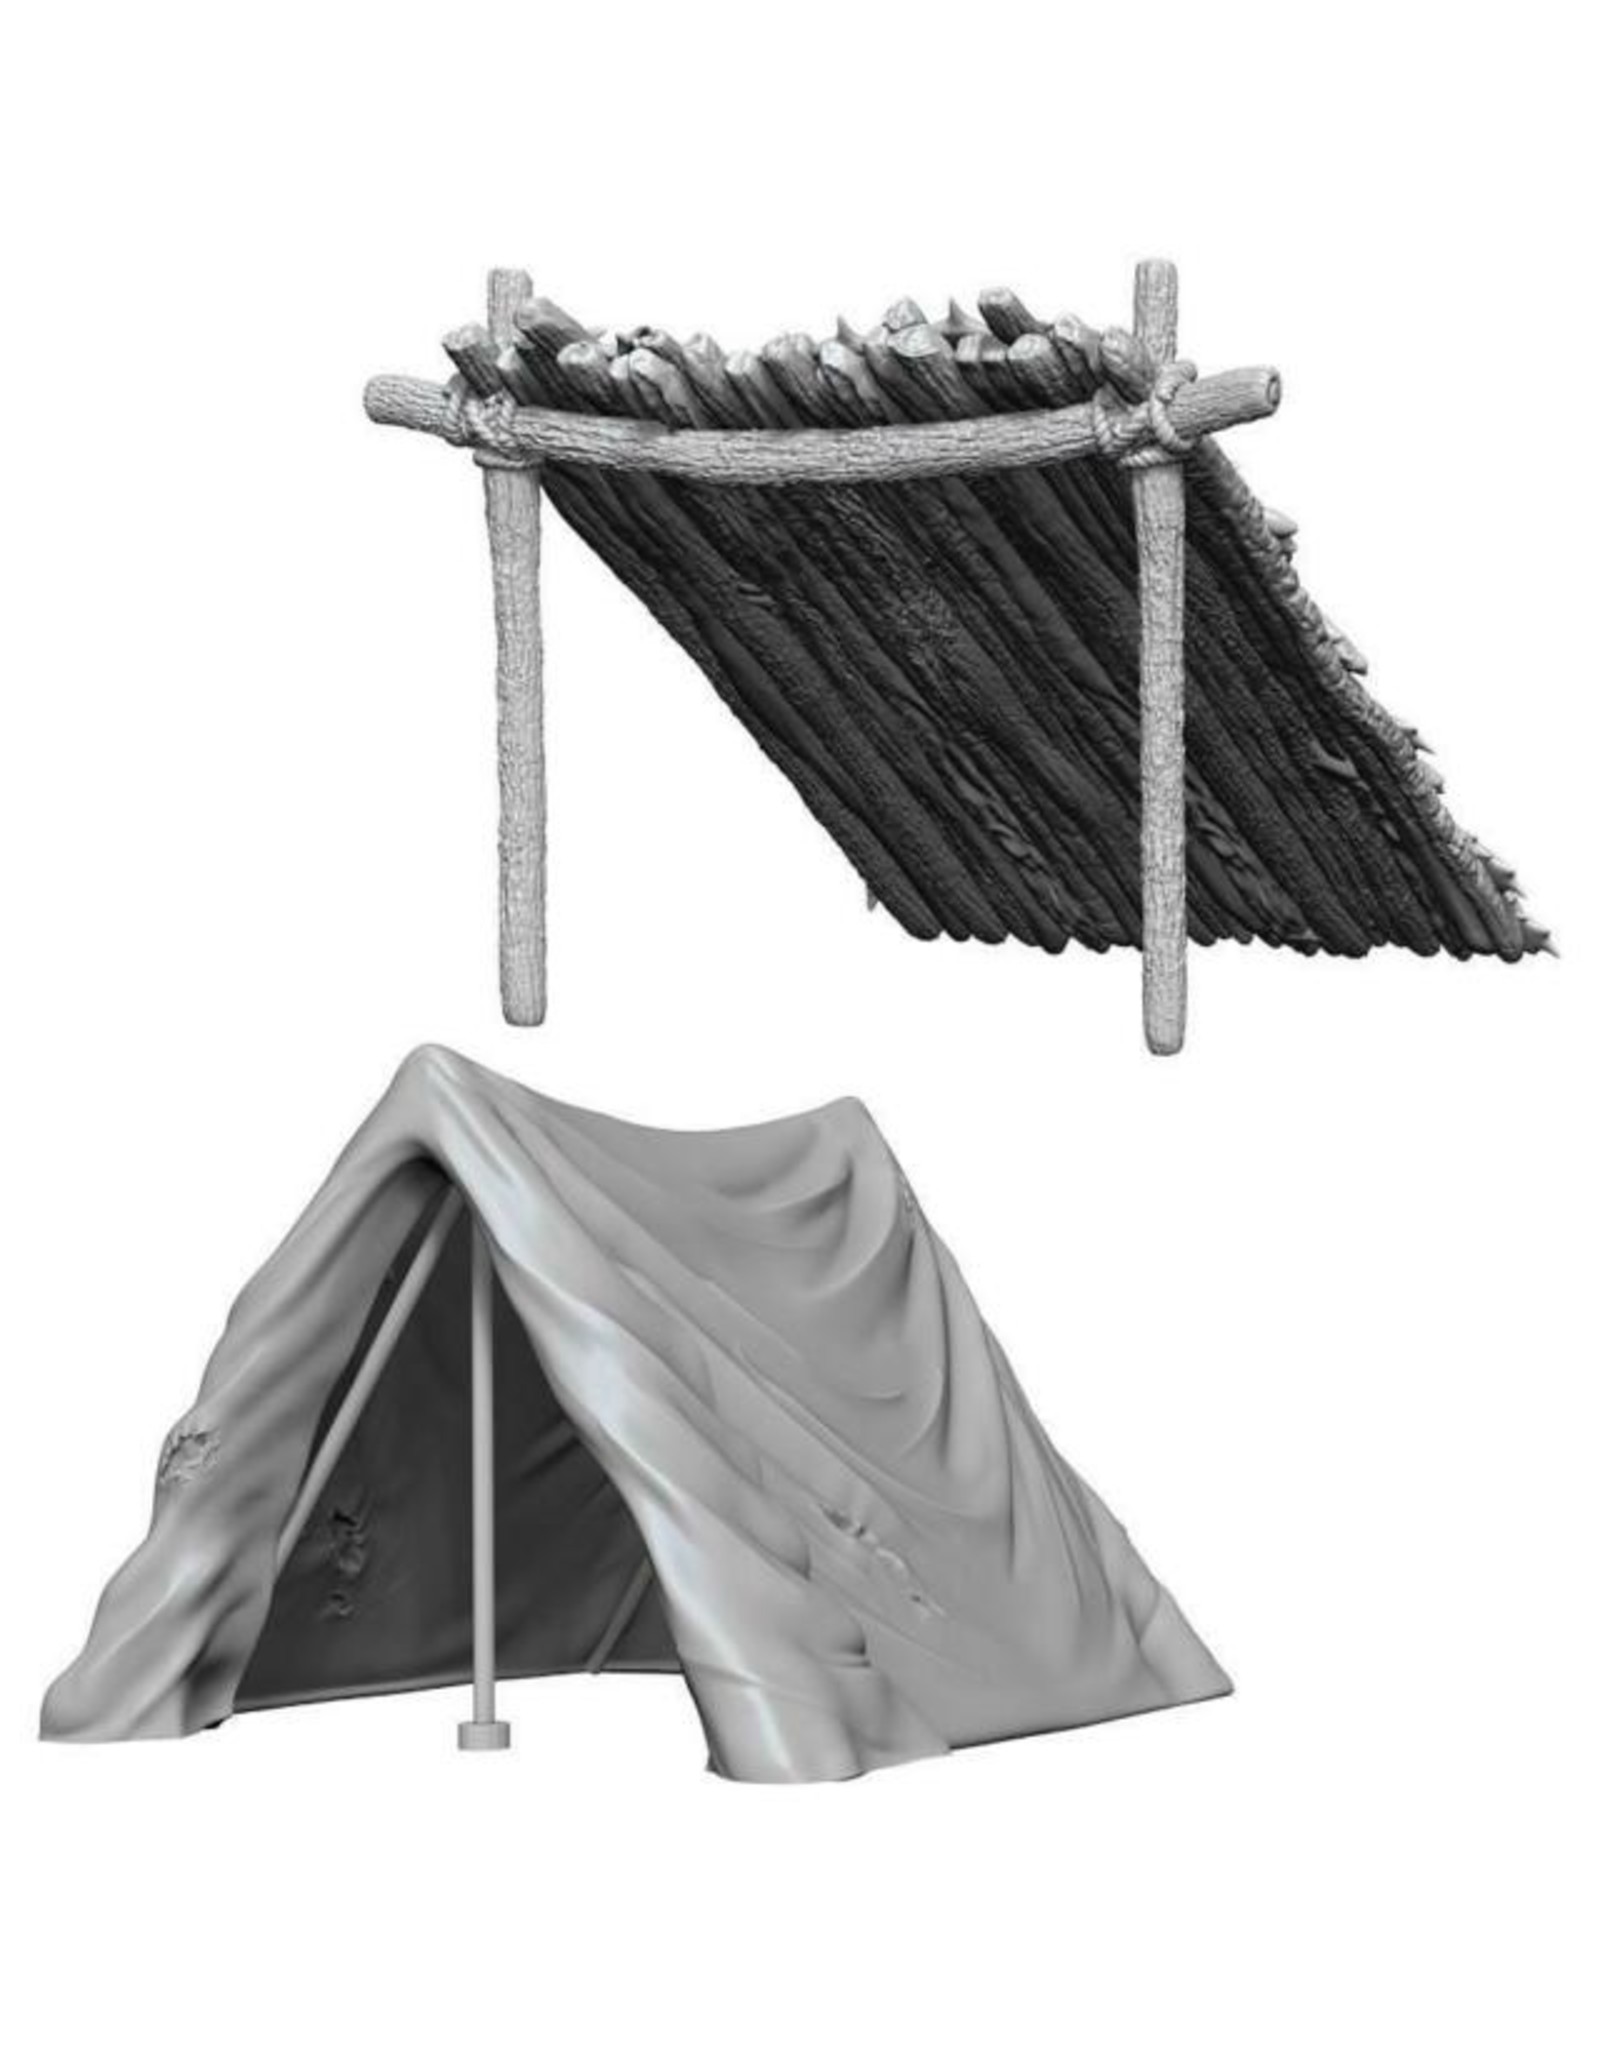 WizKids D&D NMU: W10 Tent & Lean-To